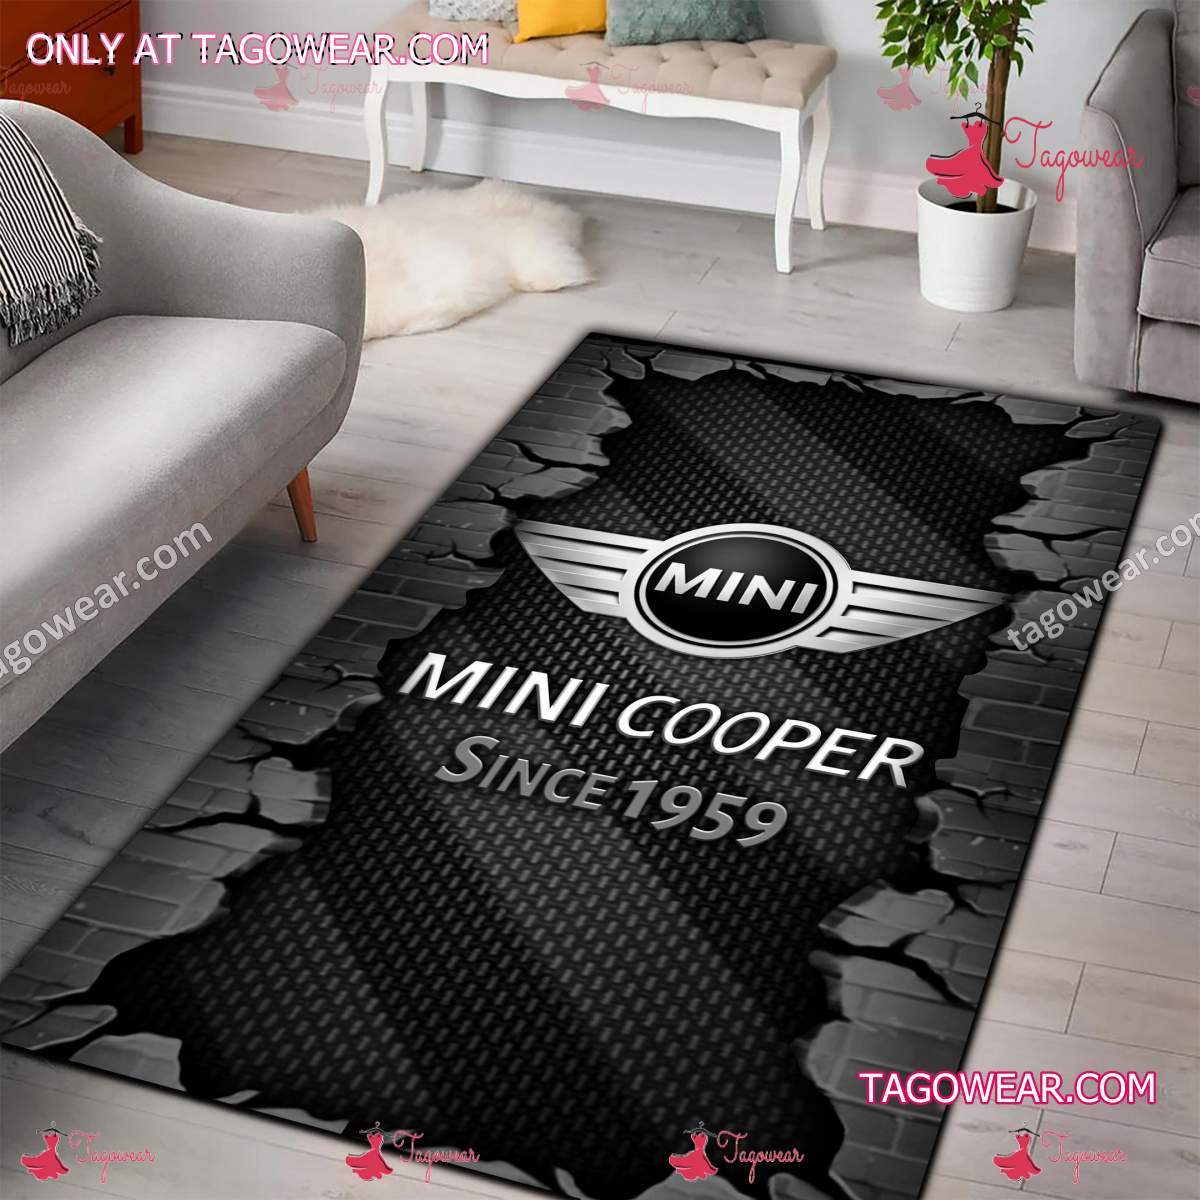 Mini Cooper Since 1959 Rug Carpet